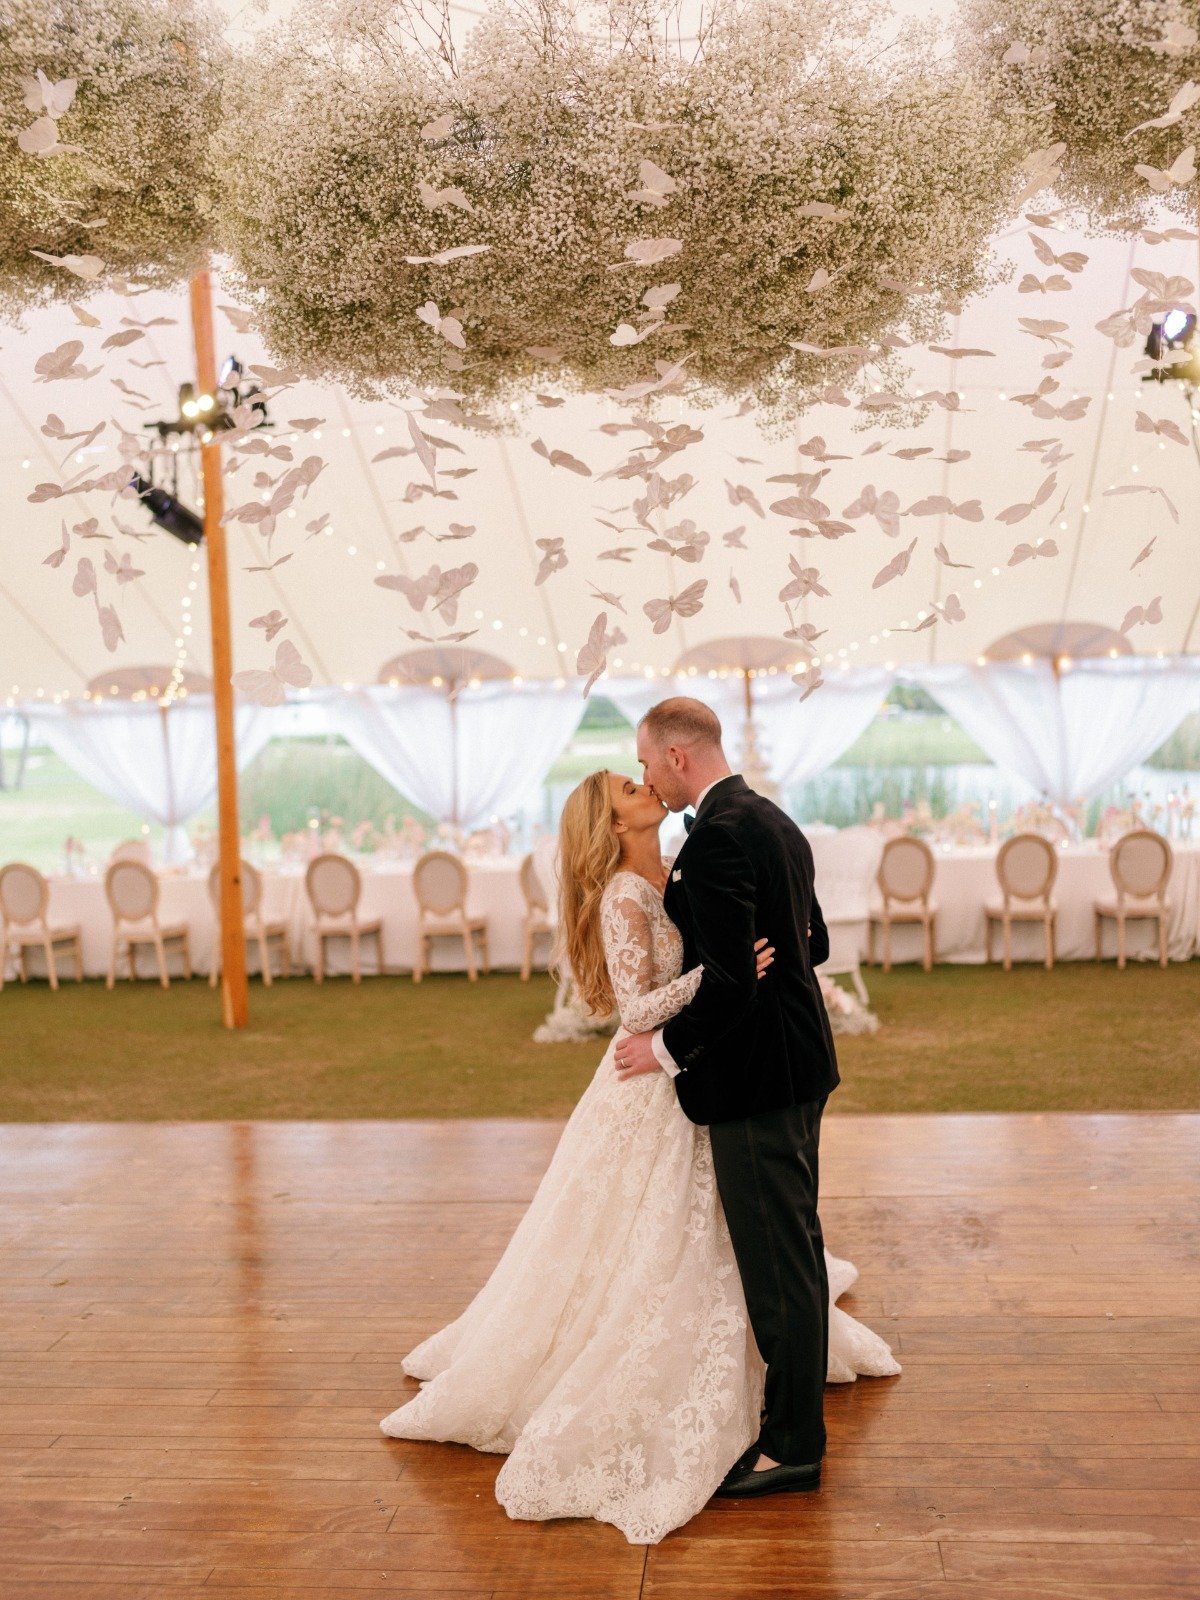 Bride and groom kissing on dance floor under baby's breath cloud with hanging butterflies